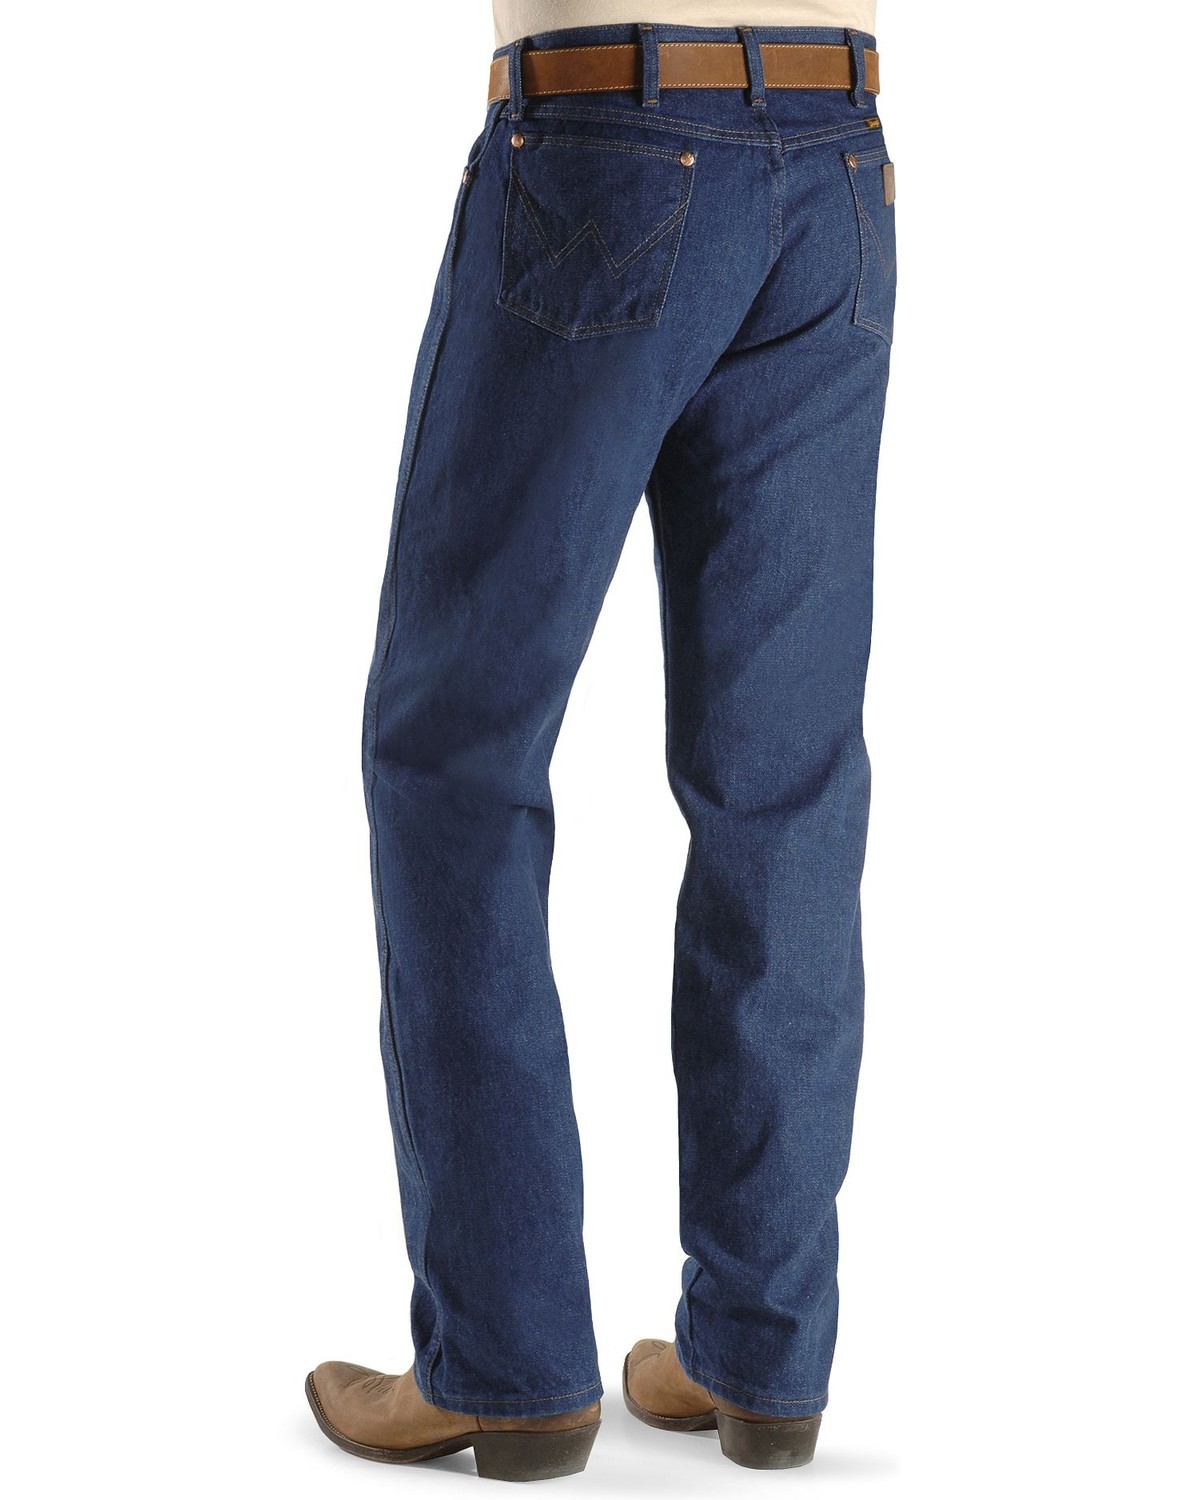 Wrangler Jeans - 13MWZ Original Fit Prewashed Denim - Big 44